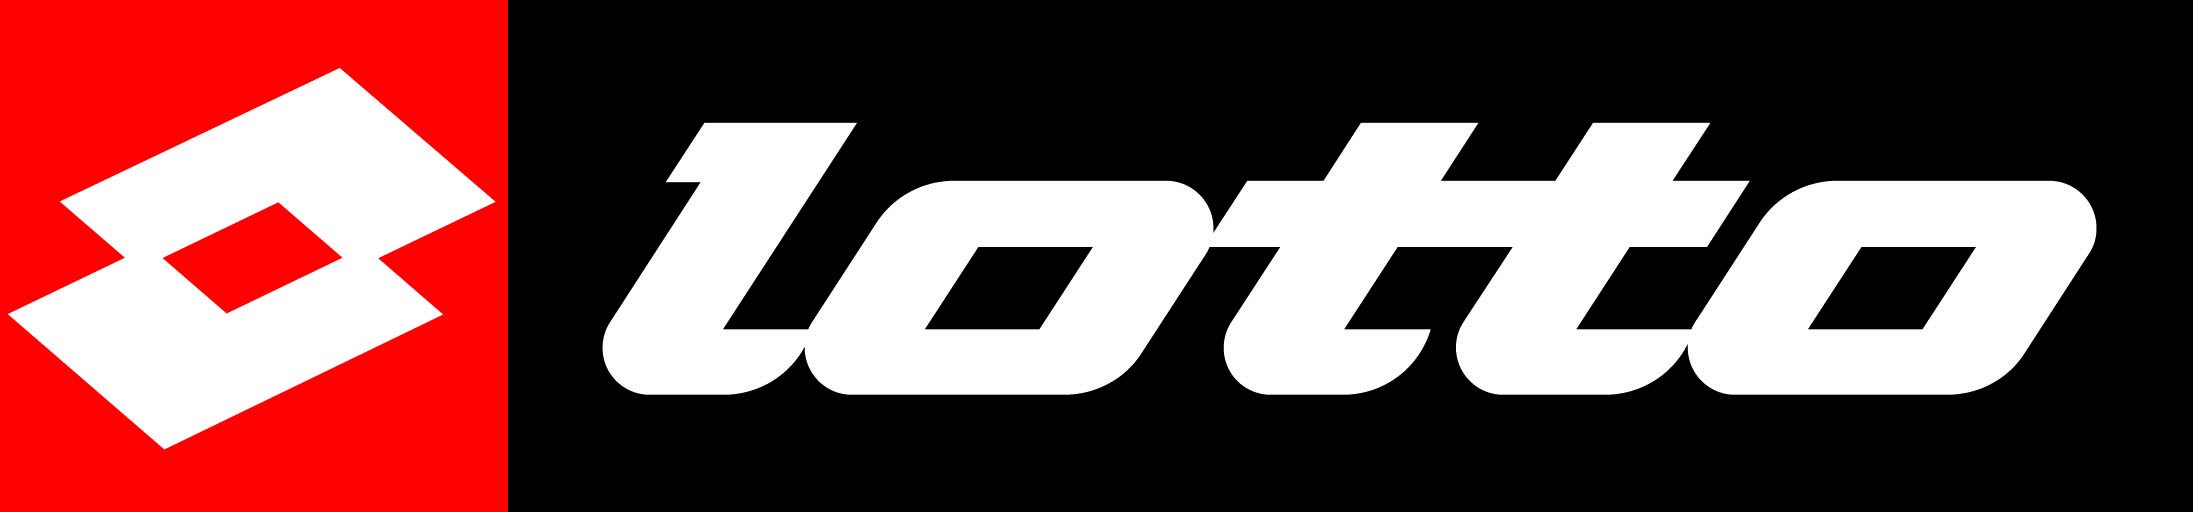 lotto-logo.jpg